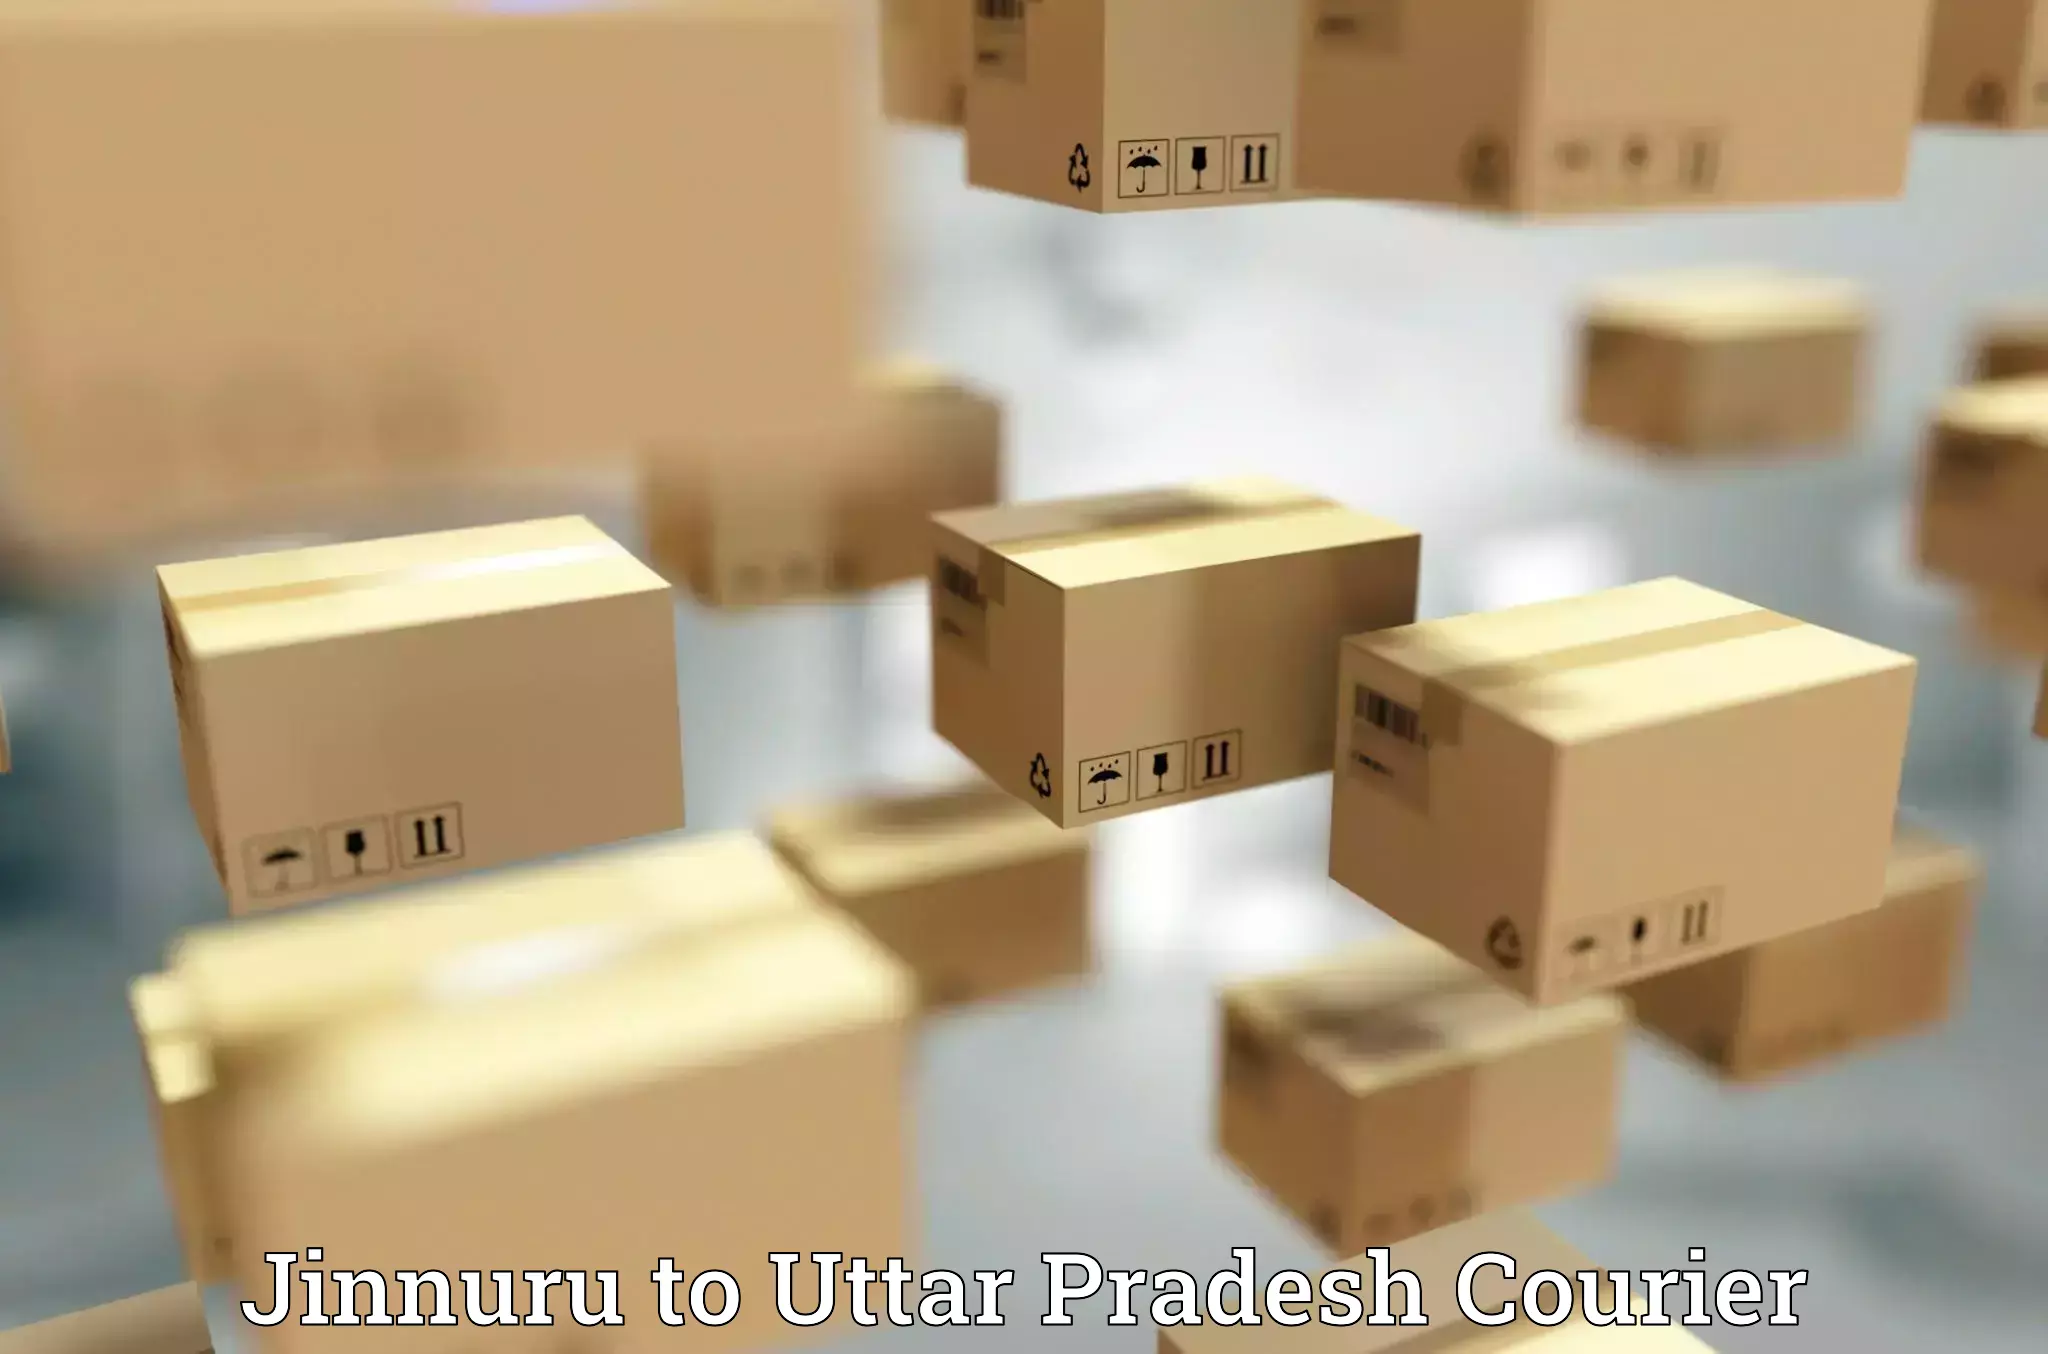 E-commerce fulfillment Jinnuru to Uttar Pradesh